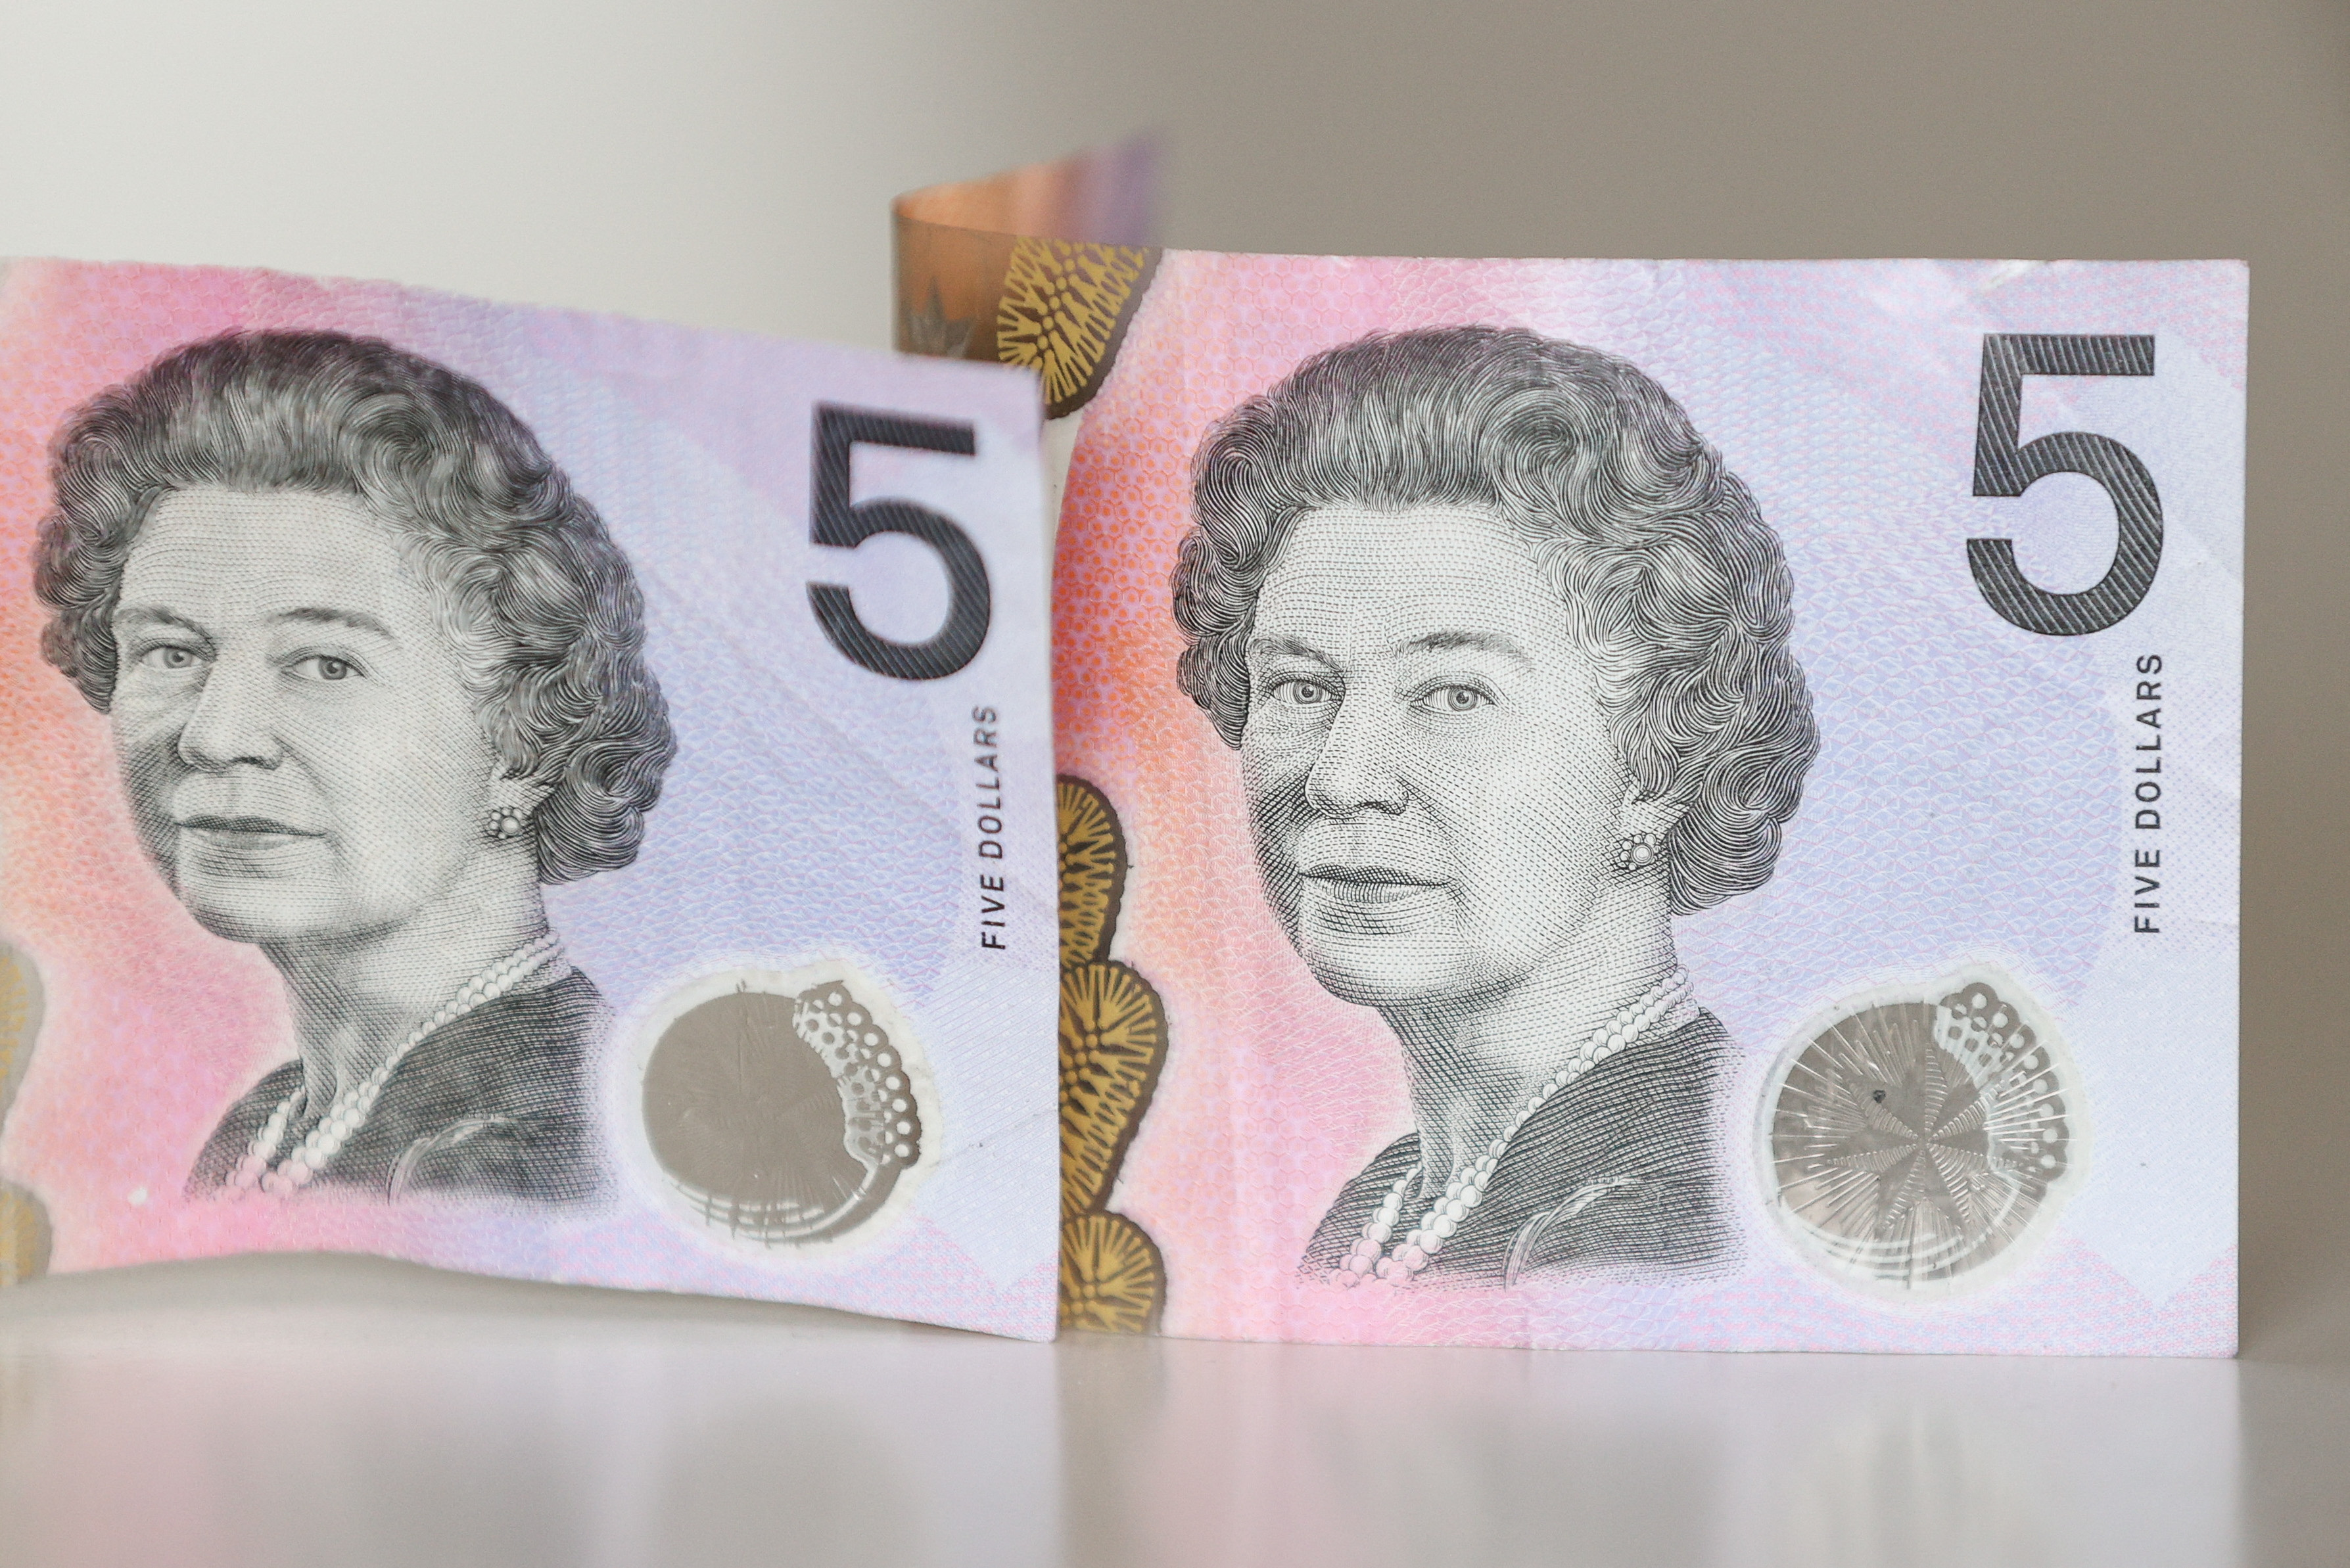 Australia reemplazará la imagen de la reina Isabel II de sus billetes de 5 dólares. (REUTERS)